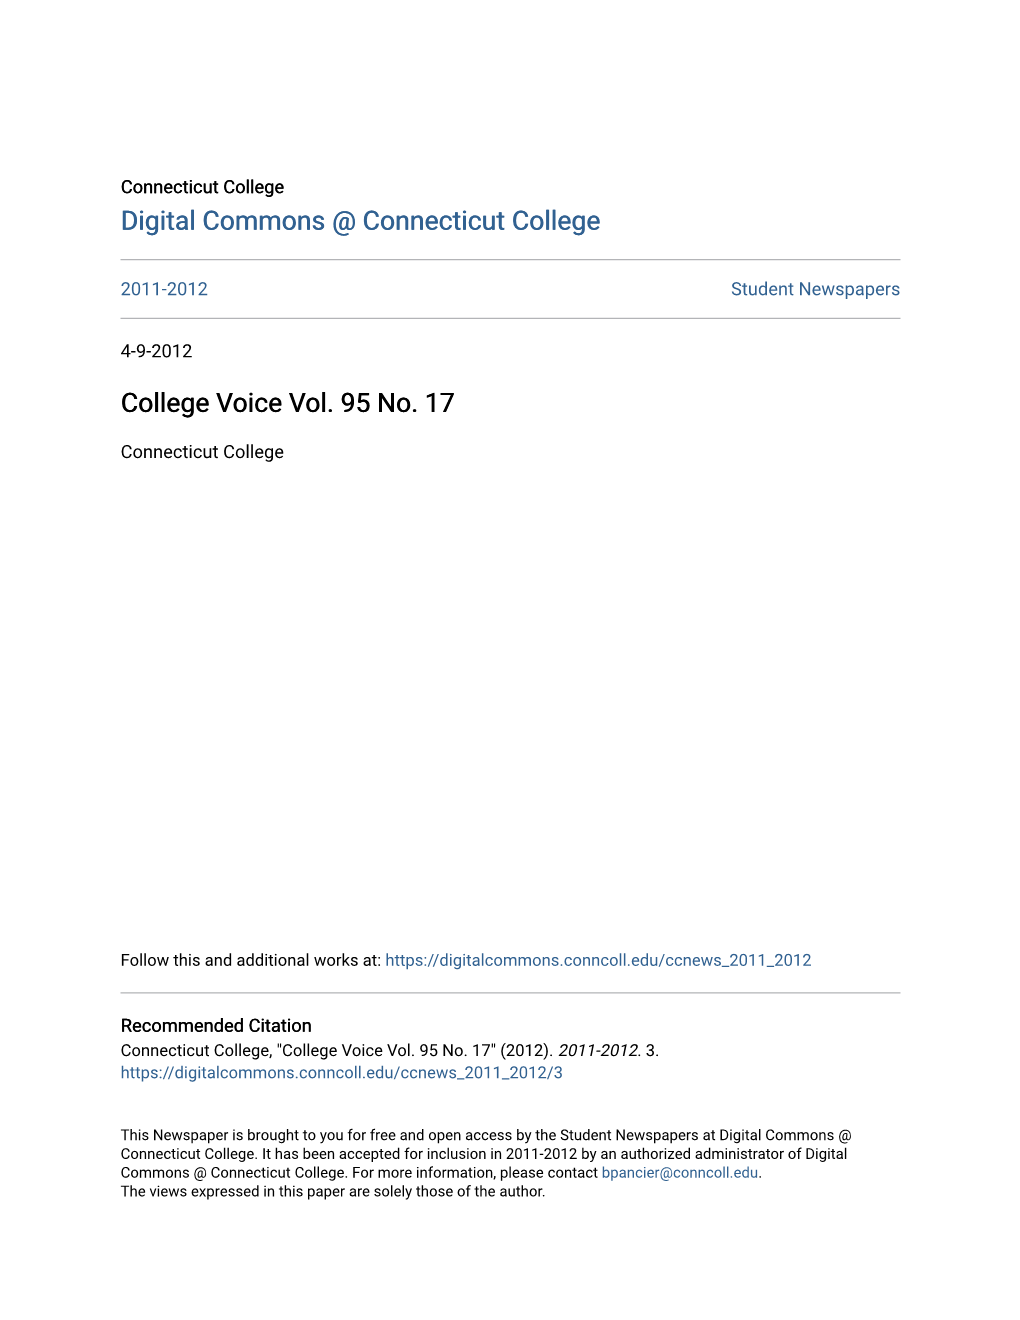 College Voice Vol. 95 No. 17